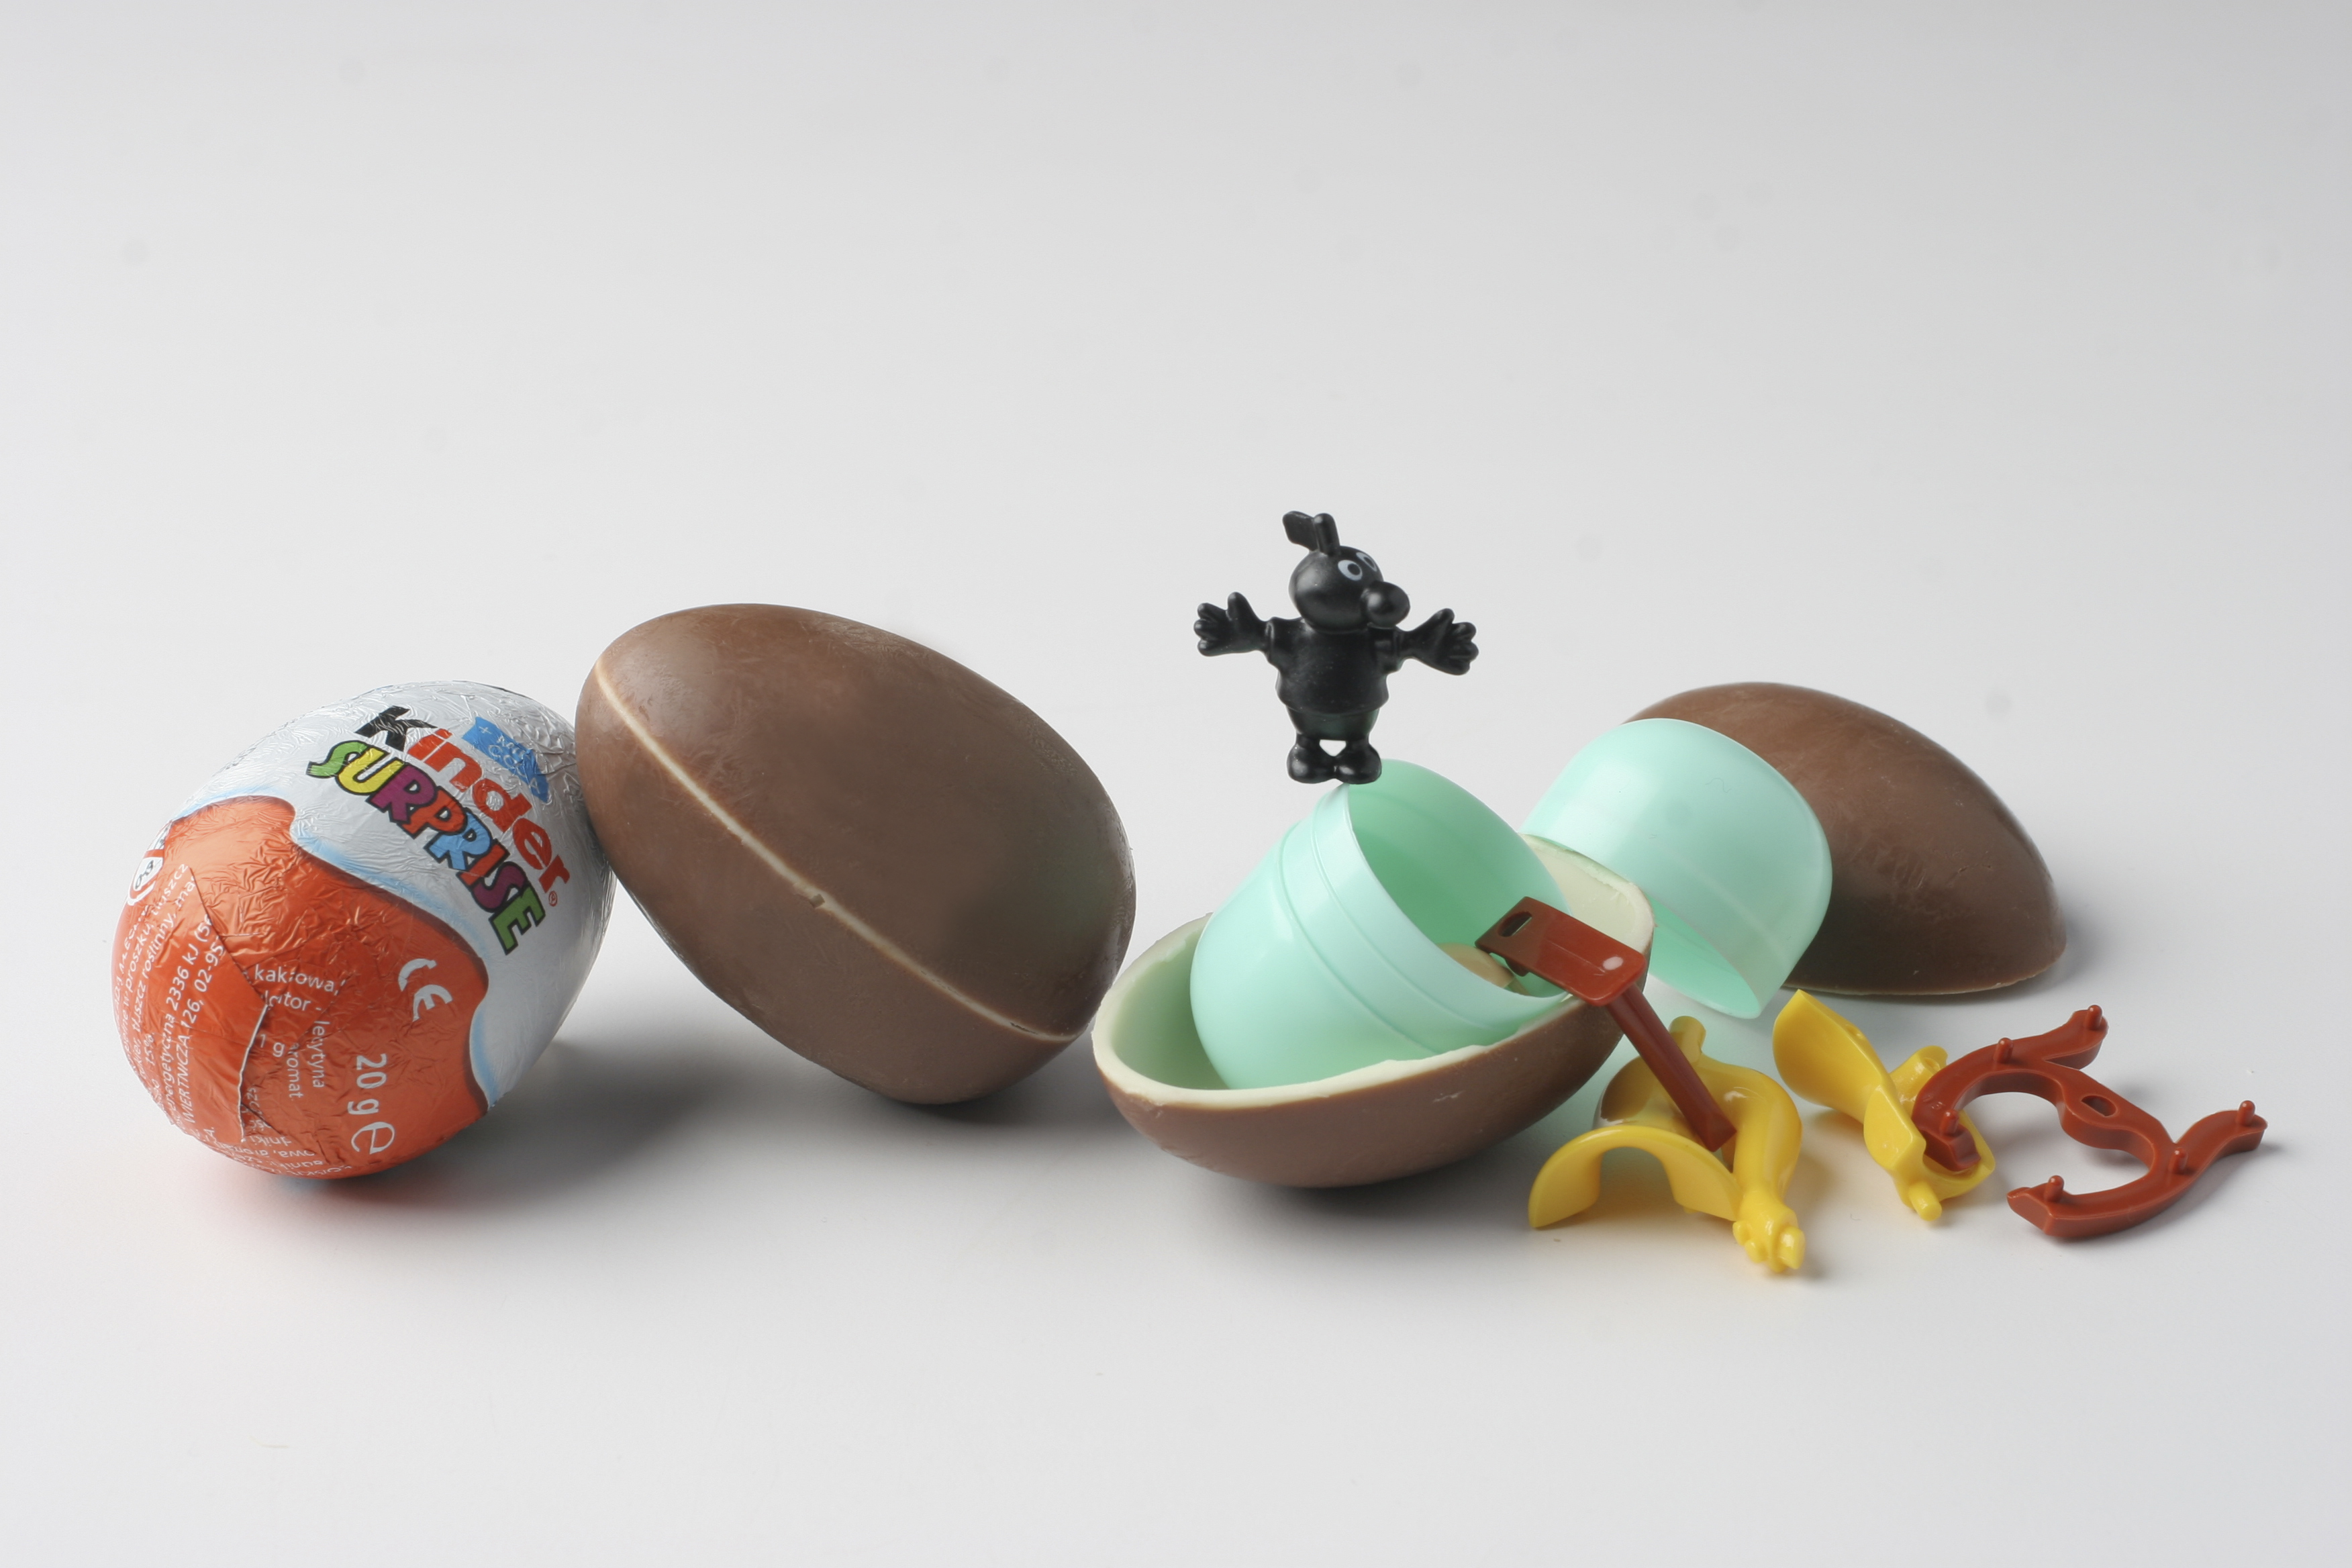 Киндер внутри игрушки. Фабрика Абрикосова Киндер сюрприз. Шоколадное яйцо Киндер сюрприз. Игрушки из шоколадных яиц. Шоколадные яйца с игрушкой.